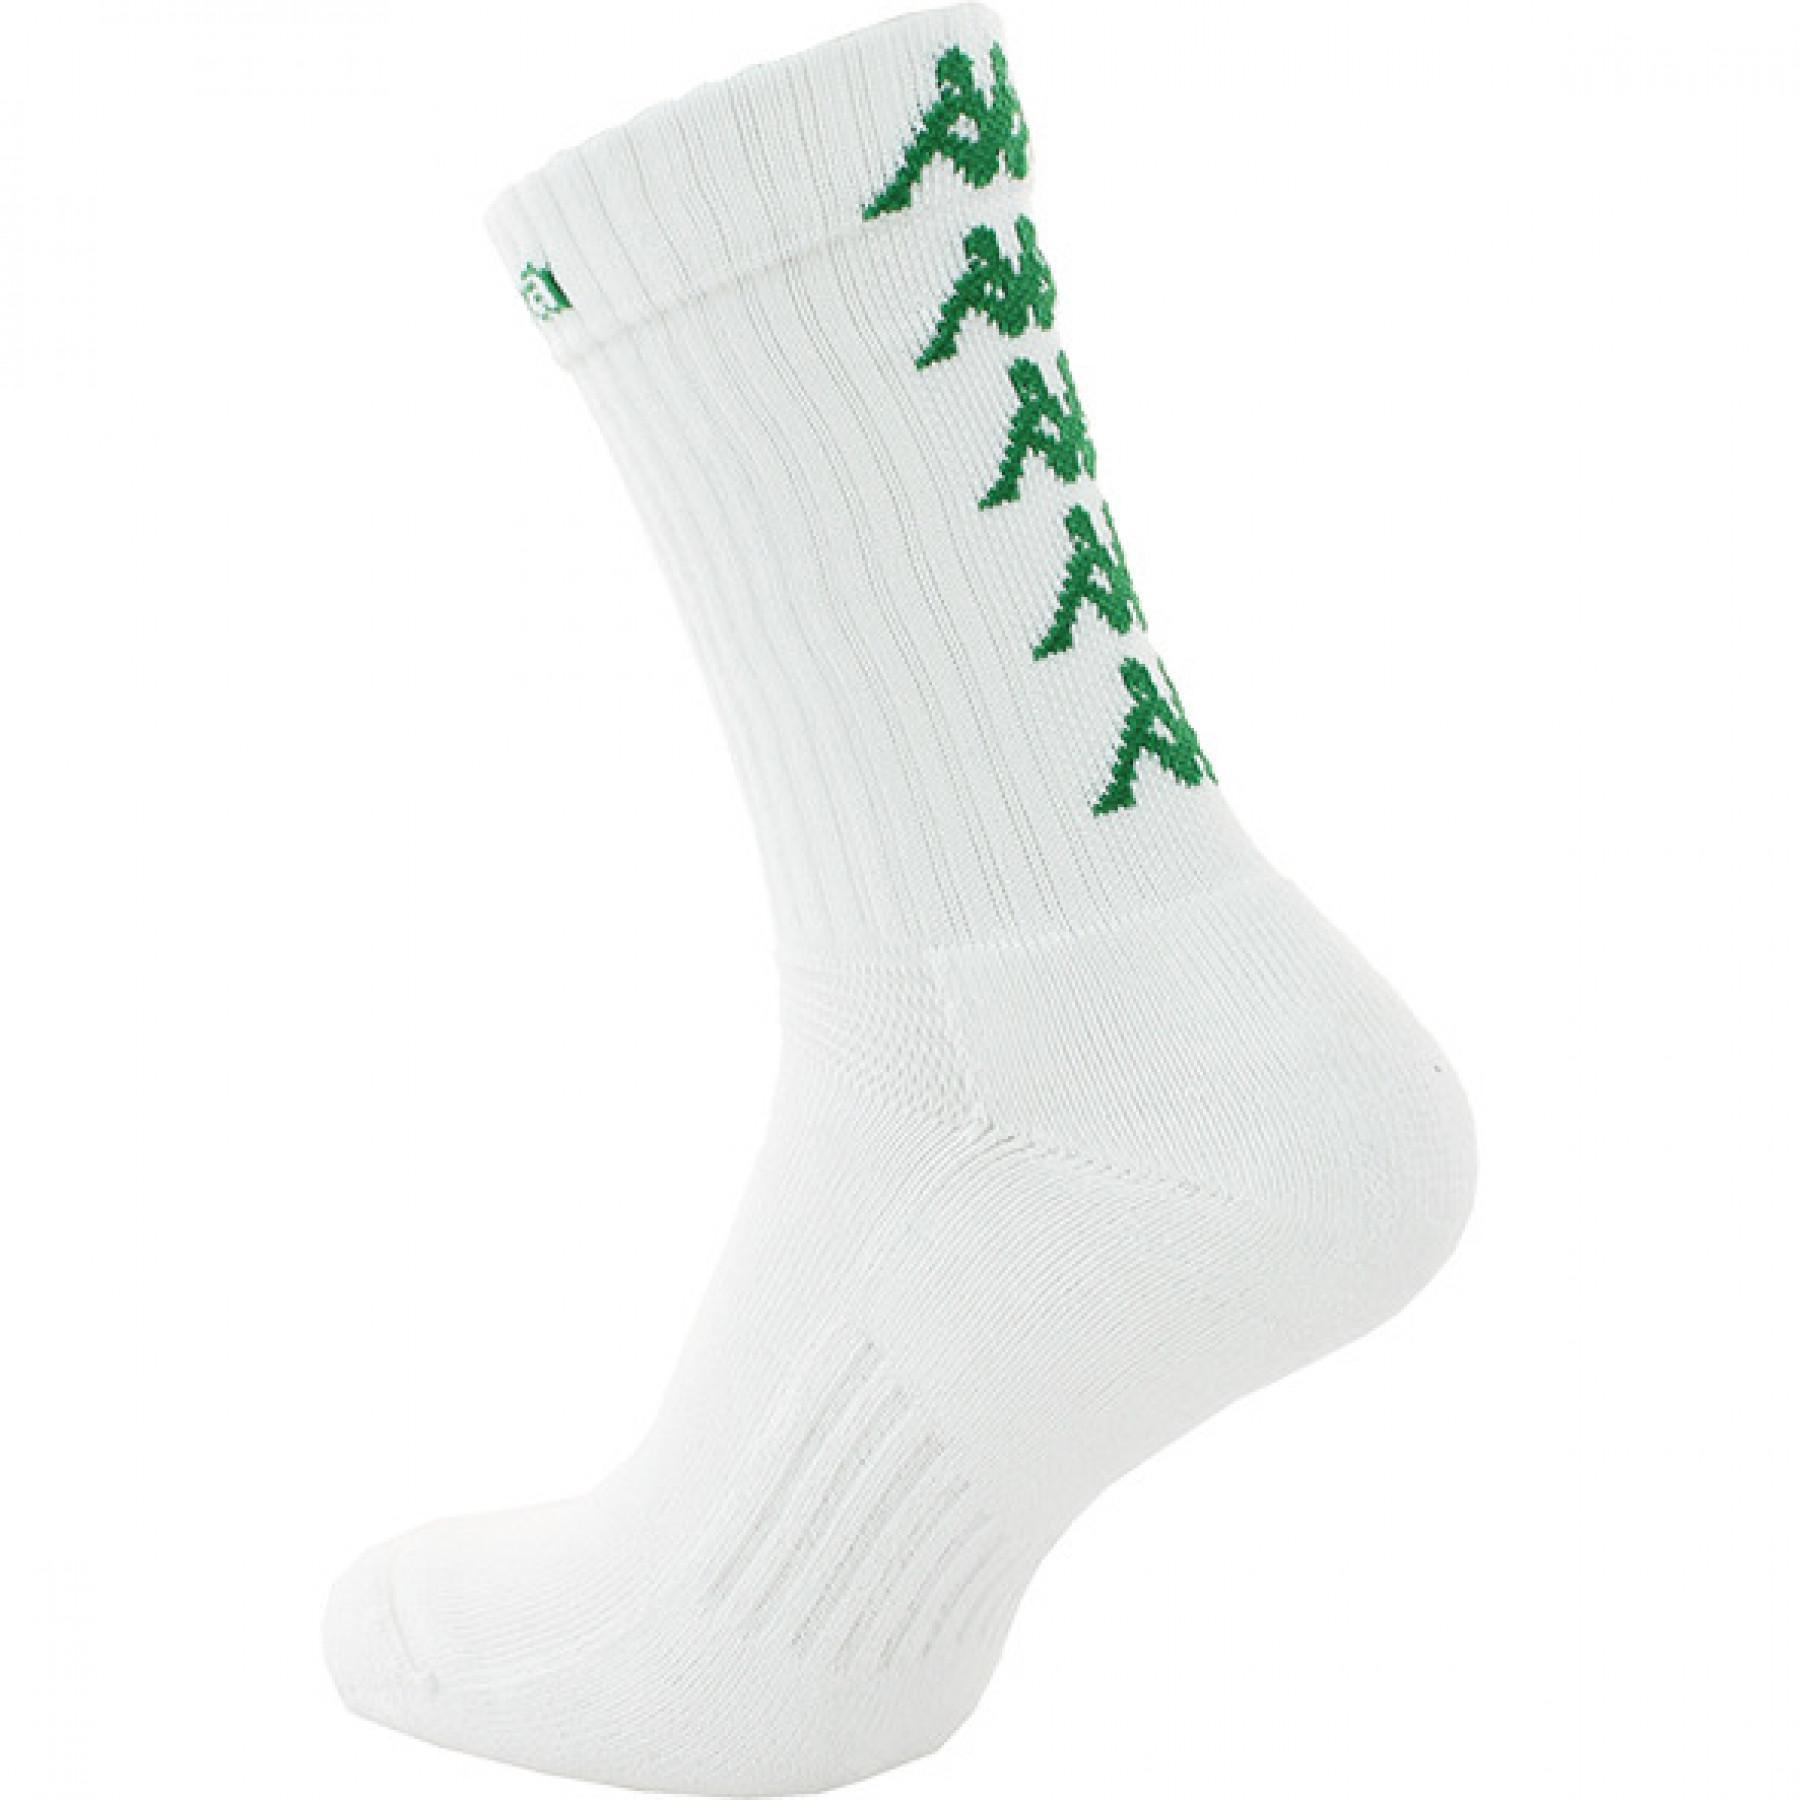 Afdaling Aanpassing Robijn Set of 3 pairs of socks Kappa Eleno - Kappa - Socks - Volleyball wear